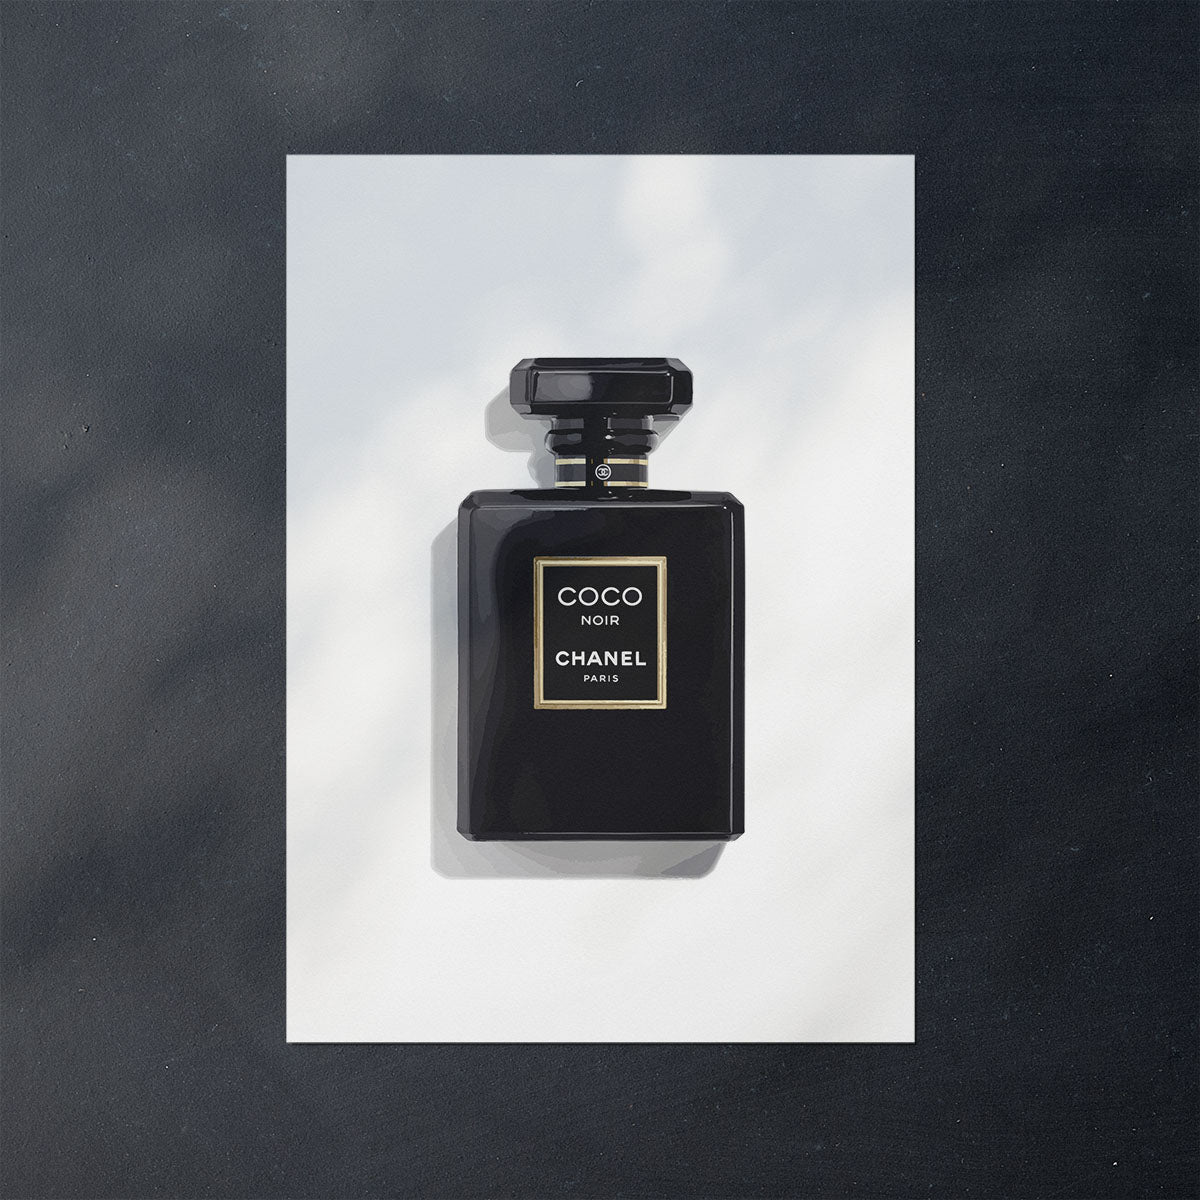 Coco Chanel Perfume Bottle Print, Black & White Perfume Poster